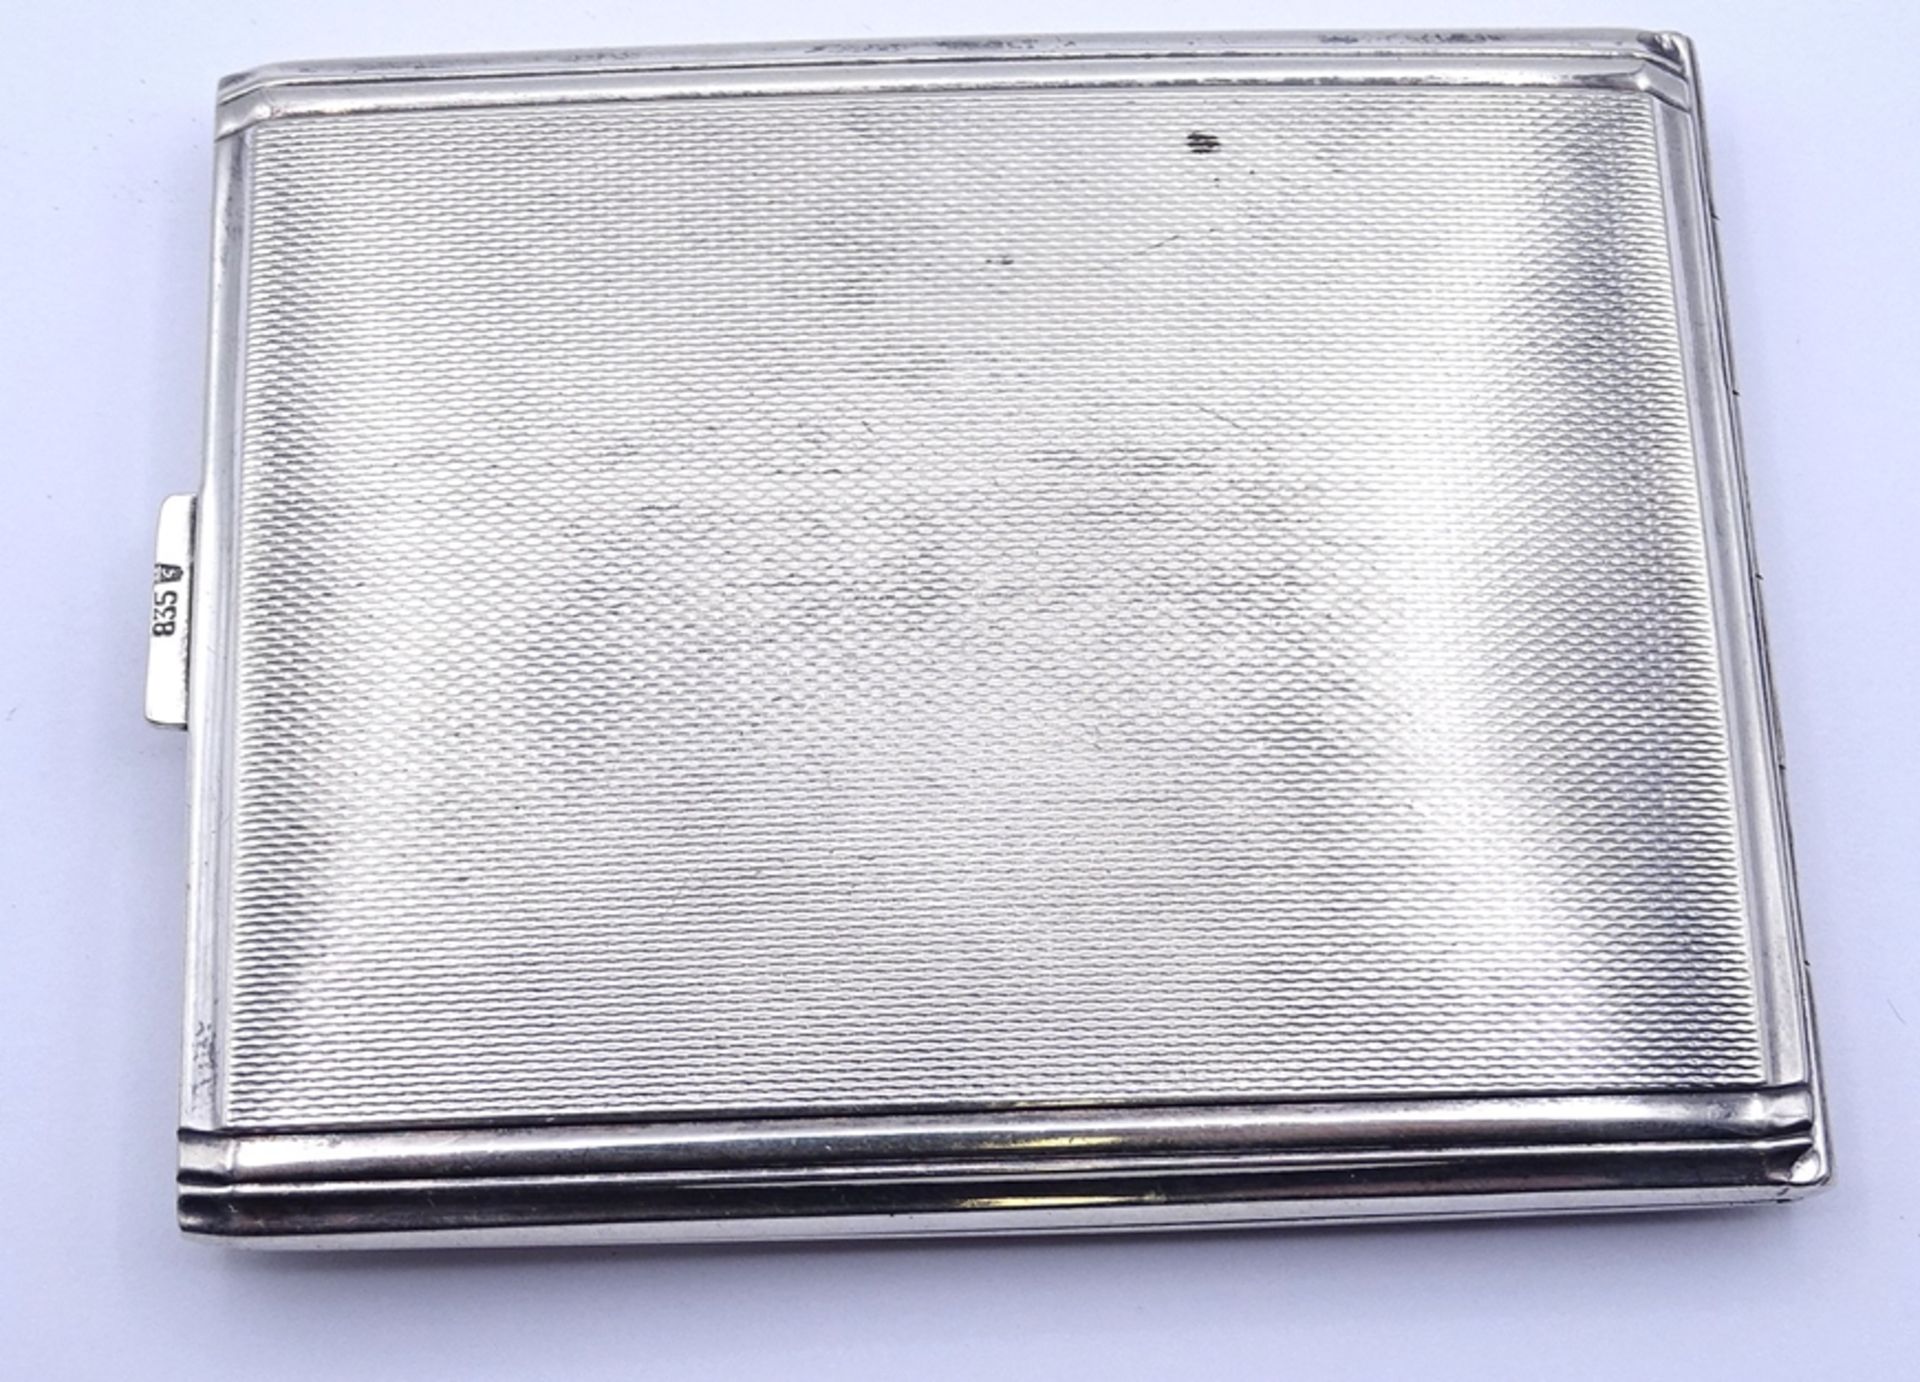 Zigaretten Etui, Silber 0.835, Initialen M.L. 7,4x9,2cm, 86g. - Image 2 of 4